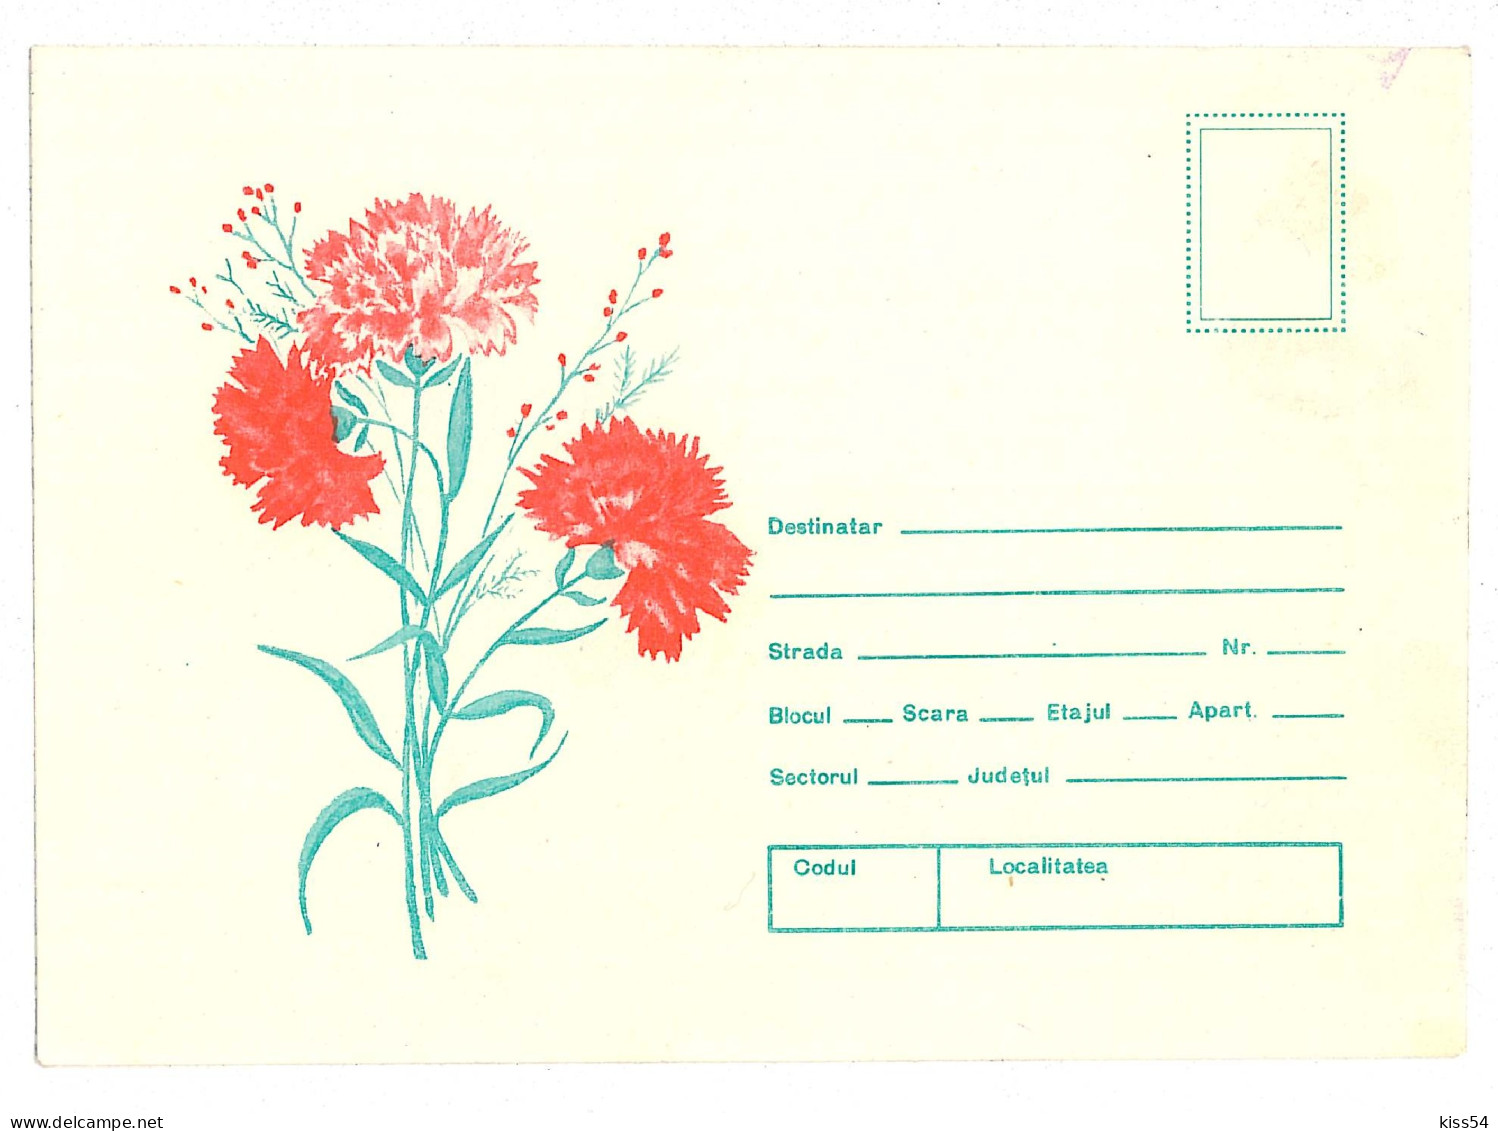 IP 92 - 82a FLOWERS, Carnations, Romania - Stationery - Unused - 1992 - Postal Stationery